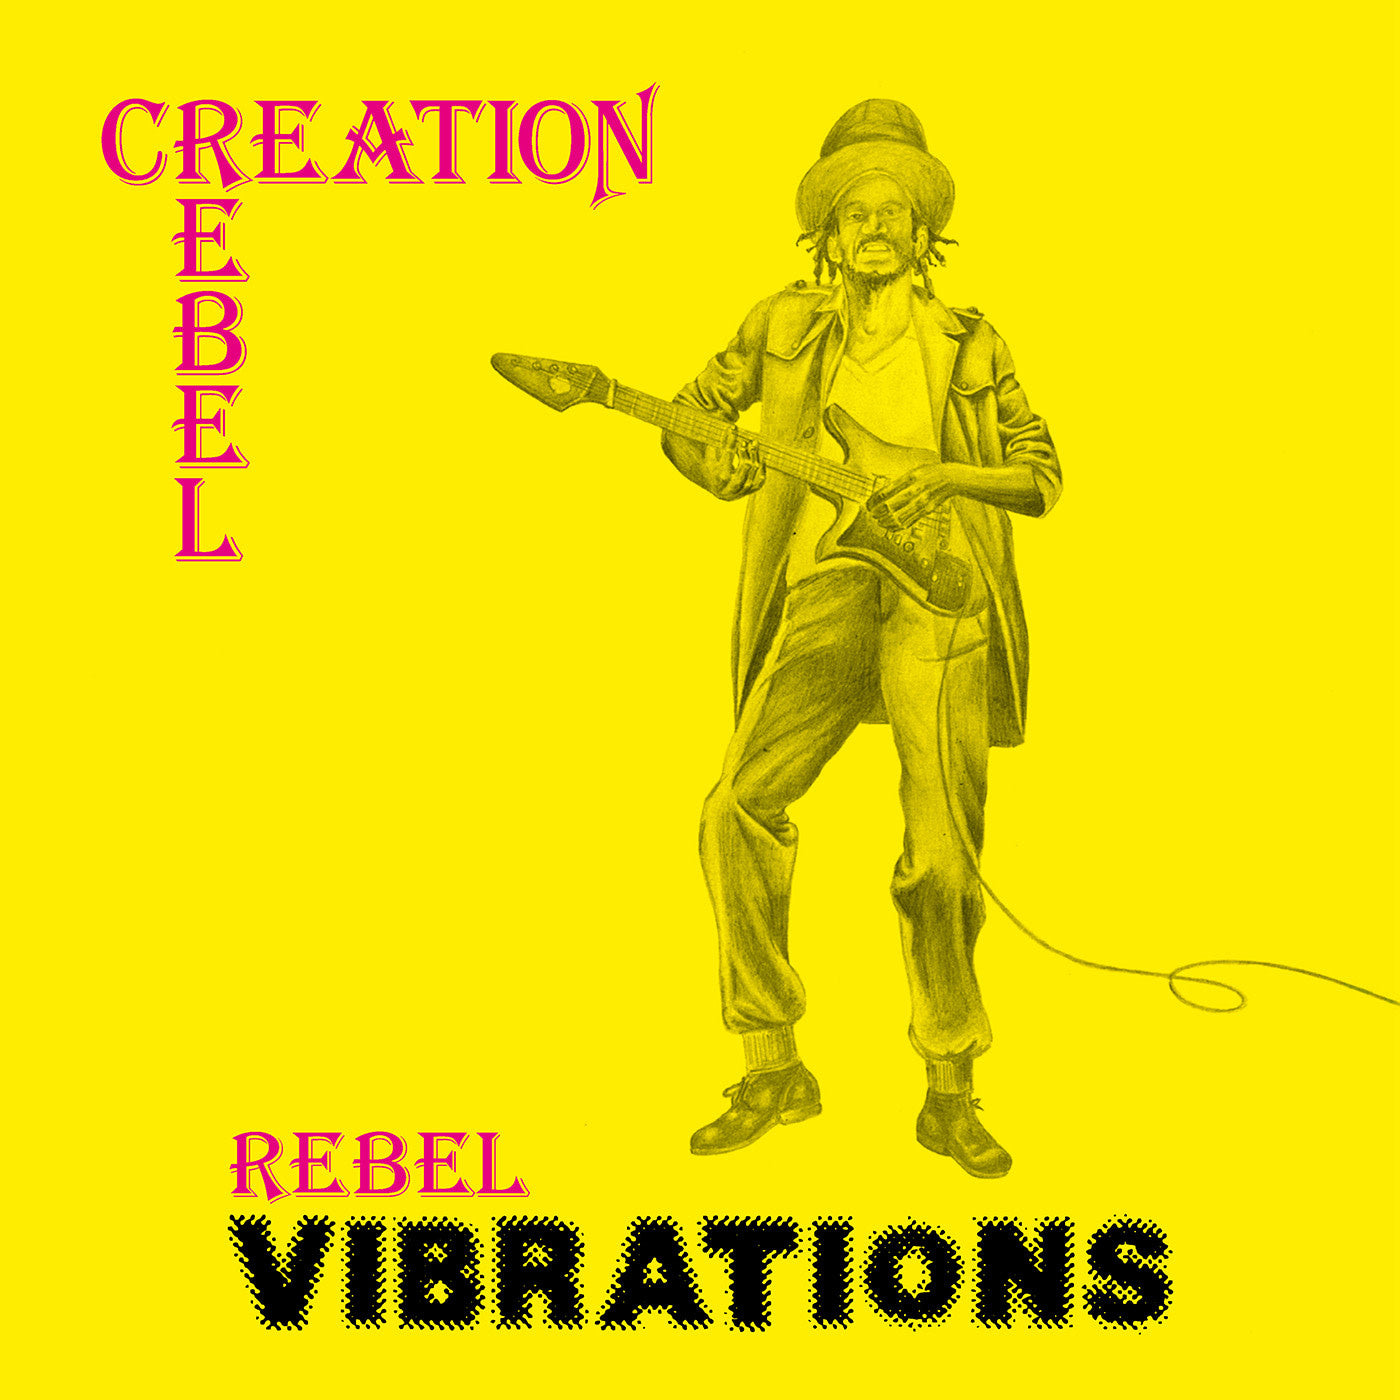 CREATION REBEL - Rebel Vibrations